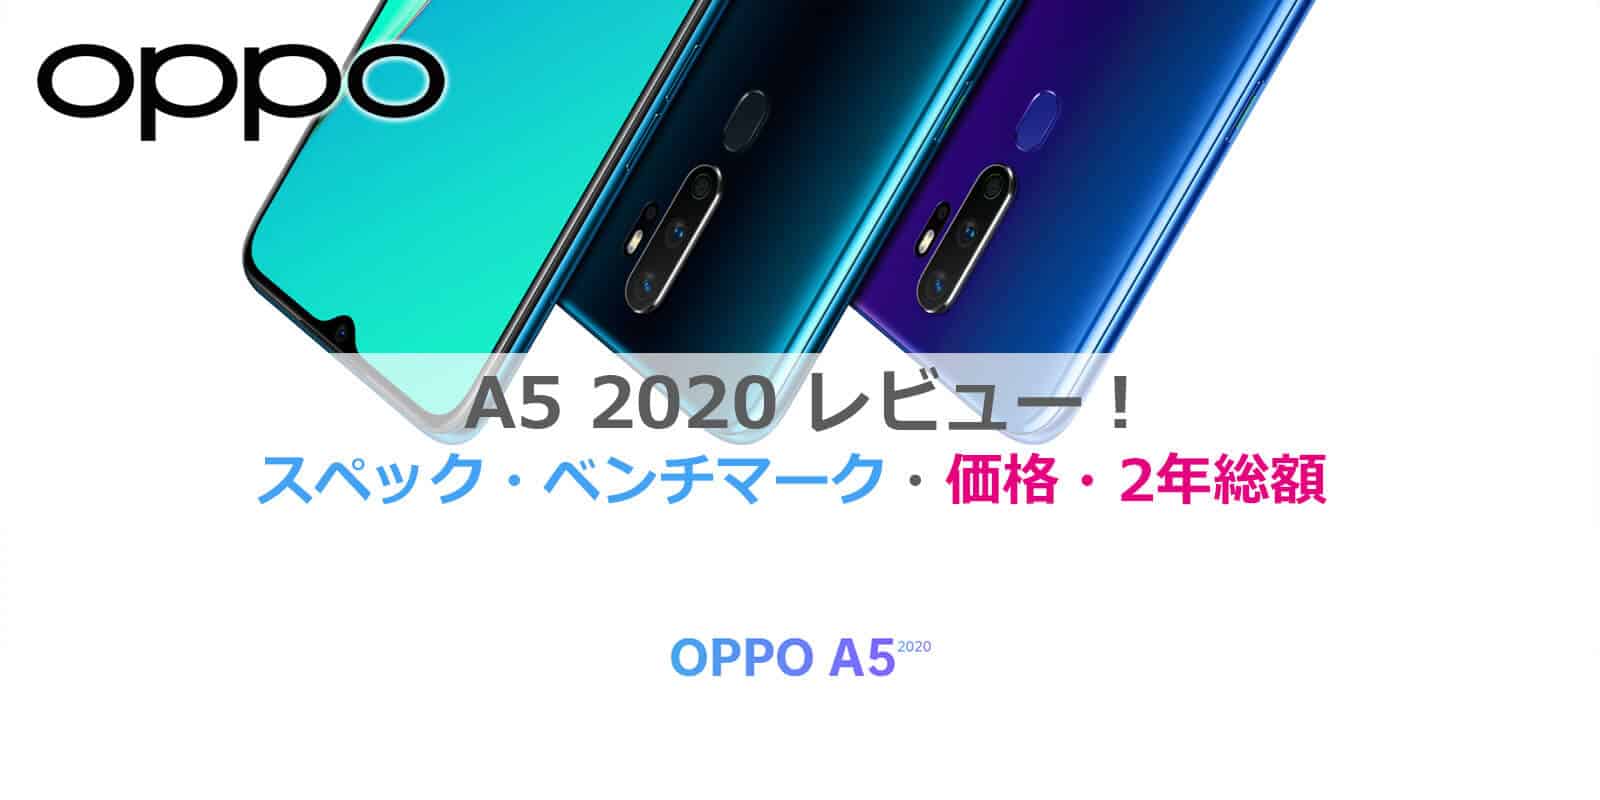 OPPO A5 2020レビュー│2年総額・価格比較・スペック・ベンチマーク 